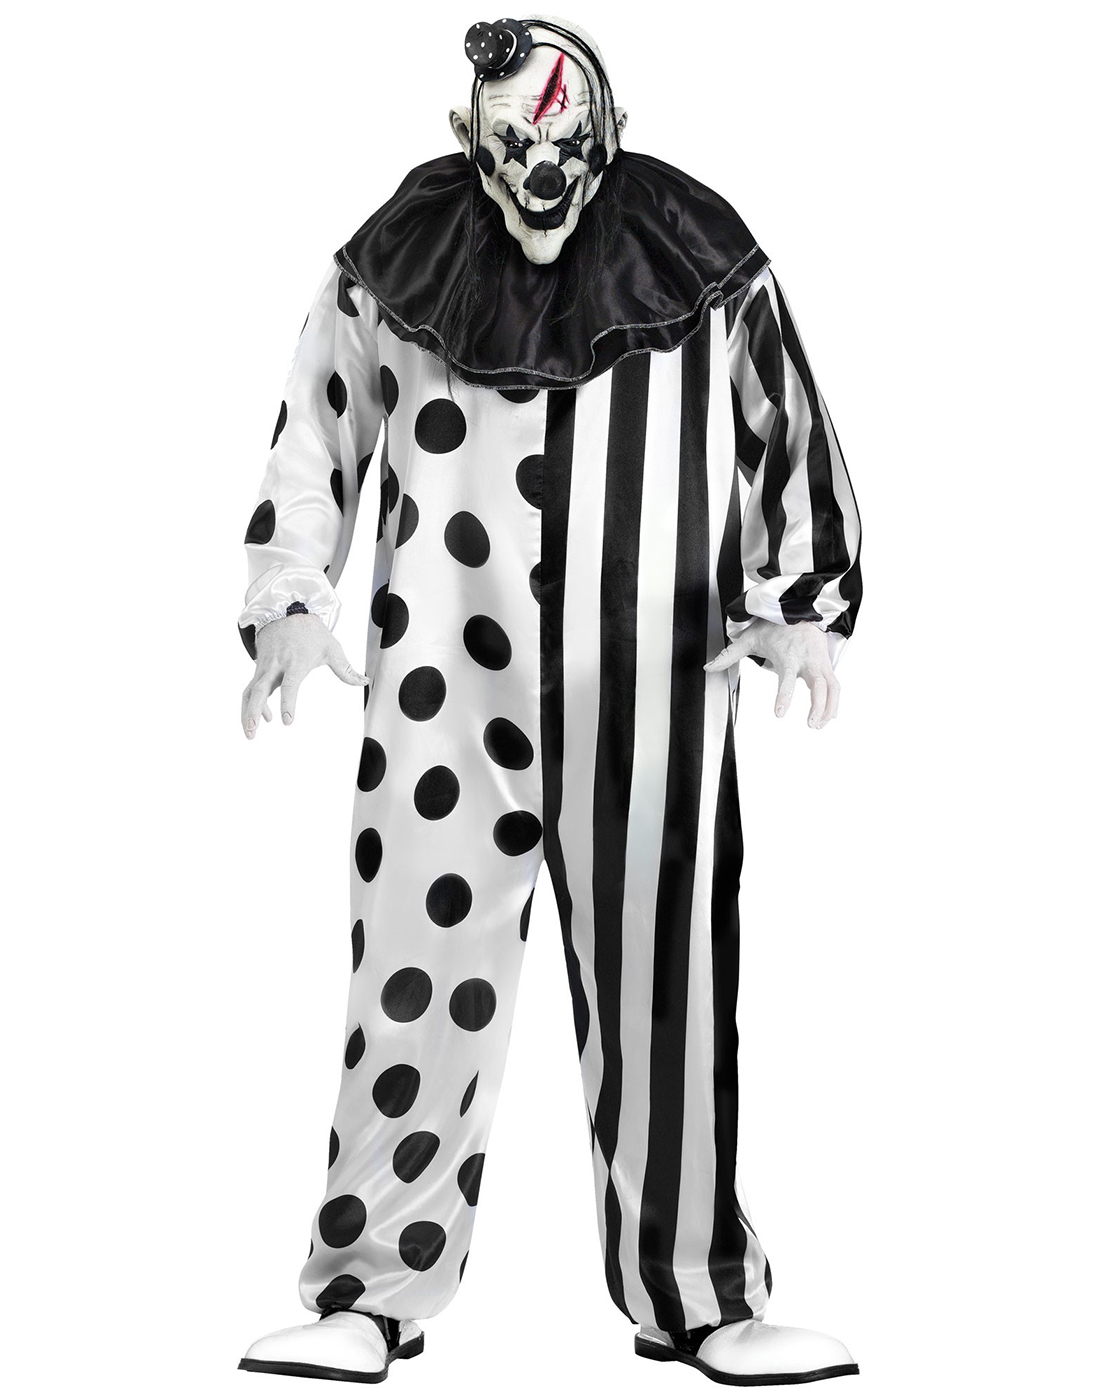 Killer Clown Adult Costume by Fun World, Size L